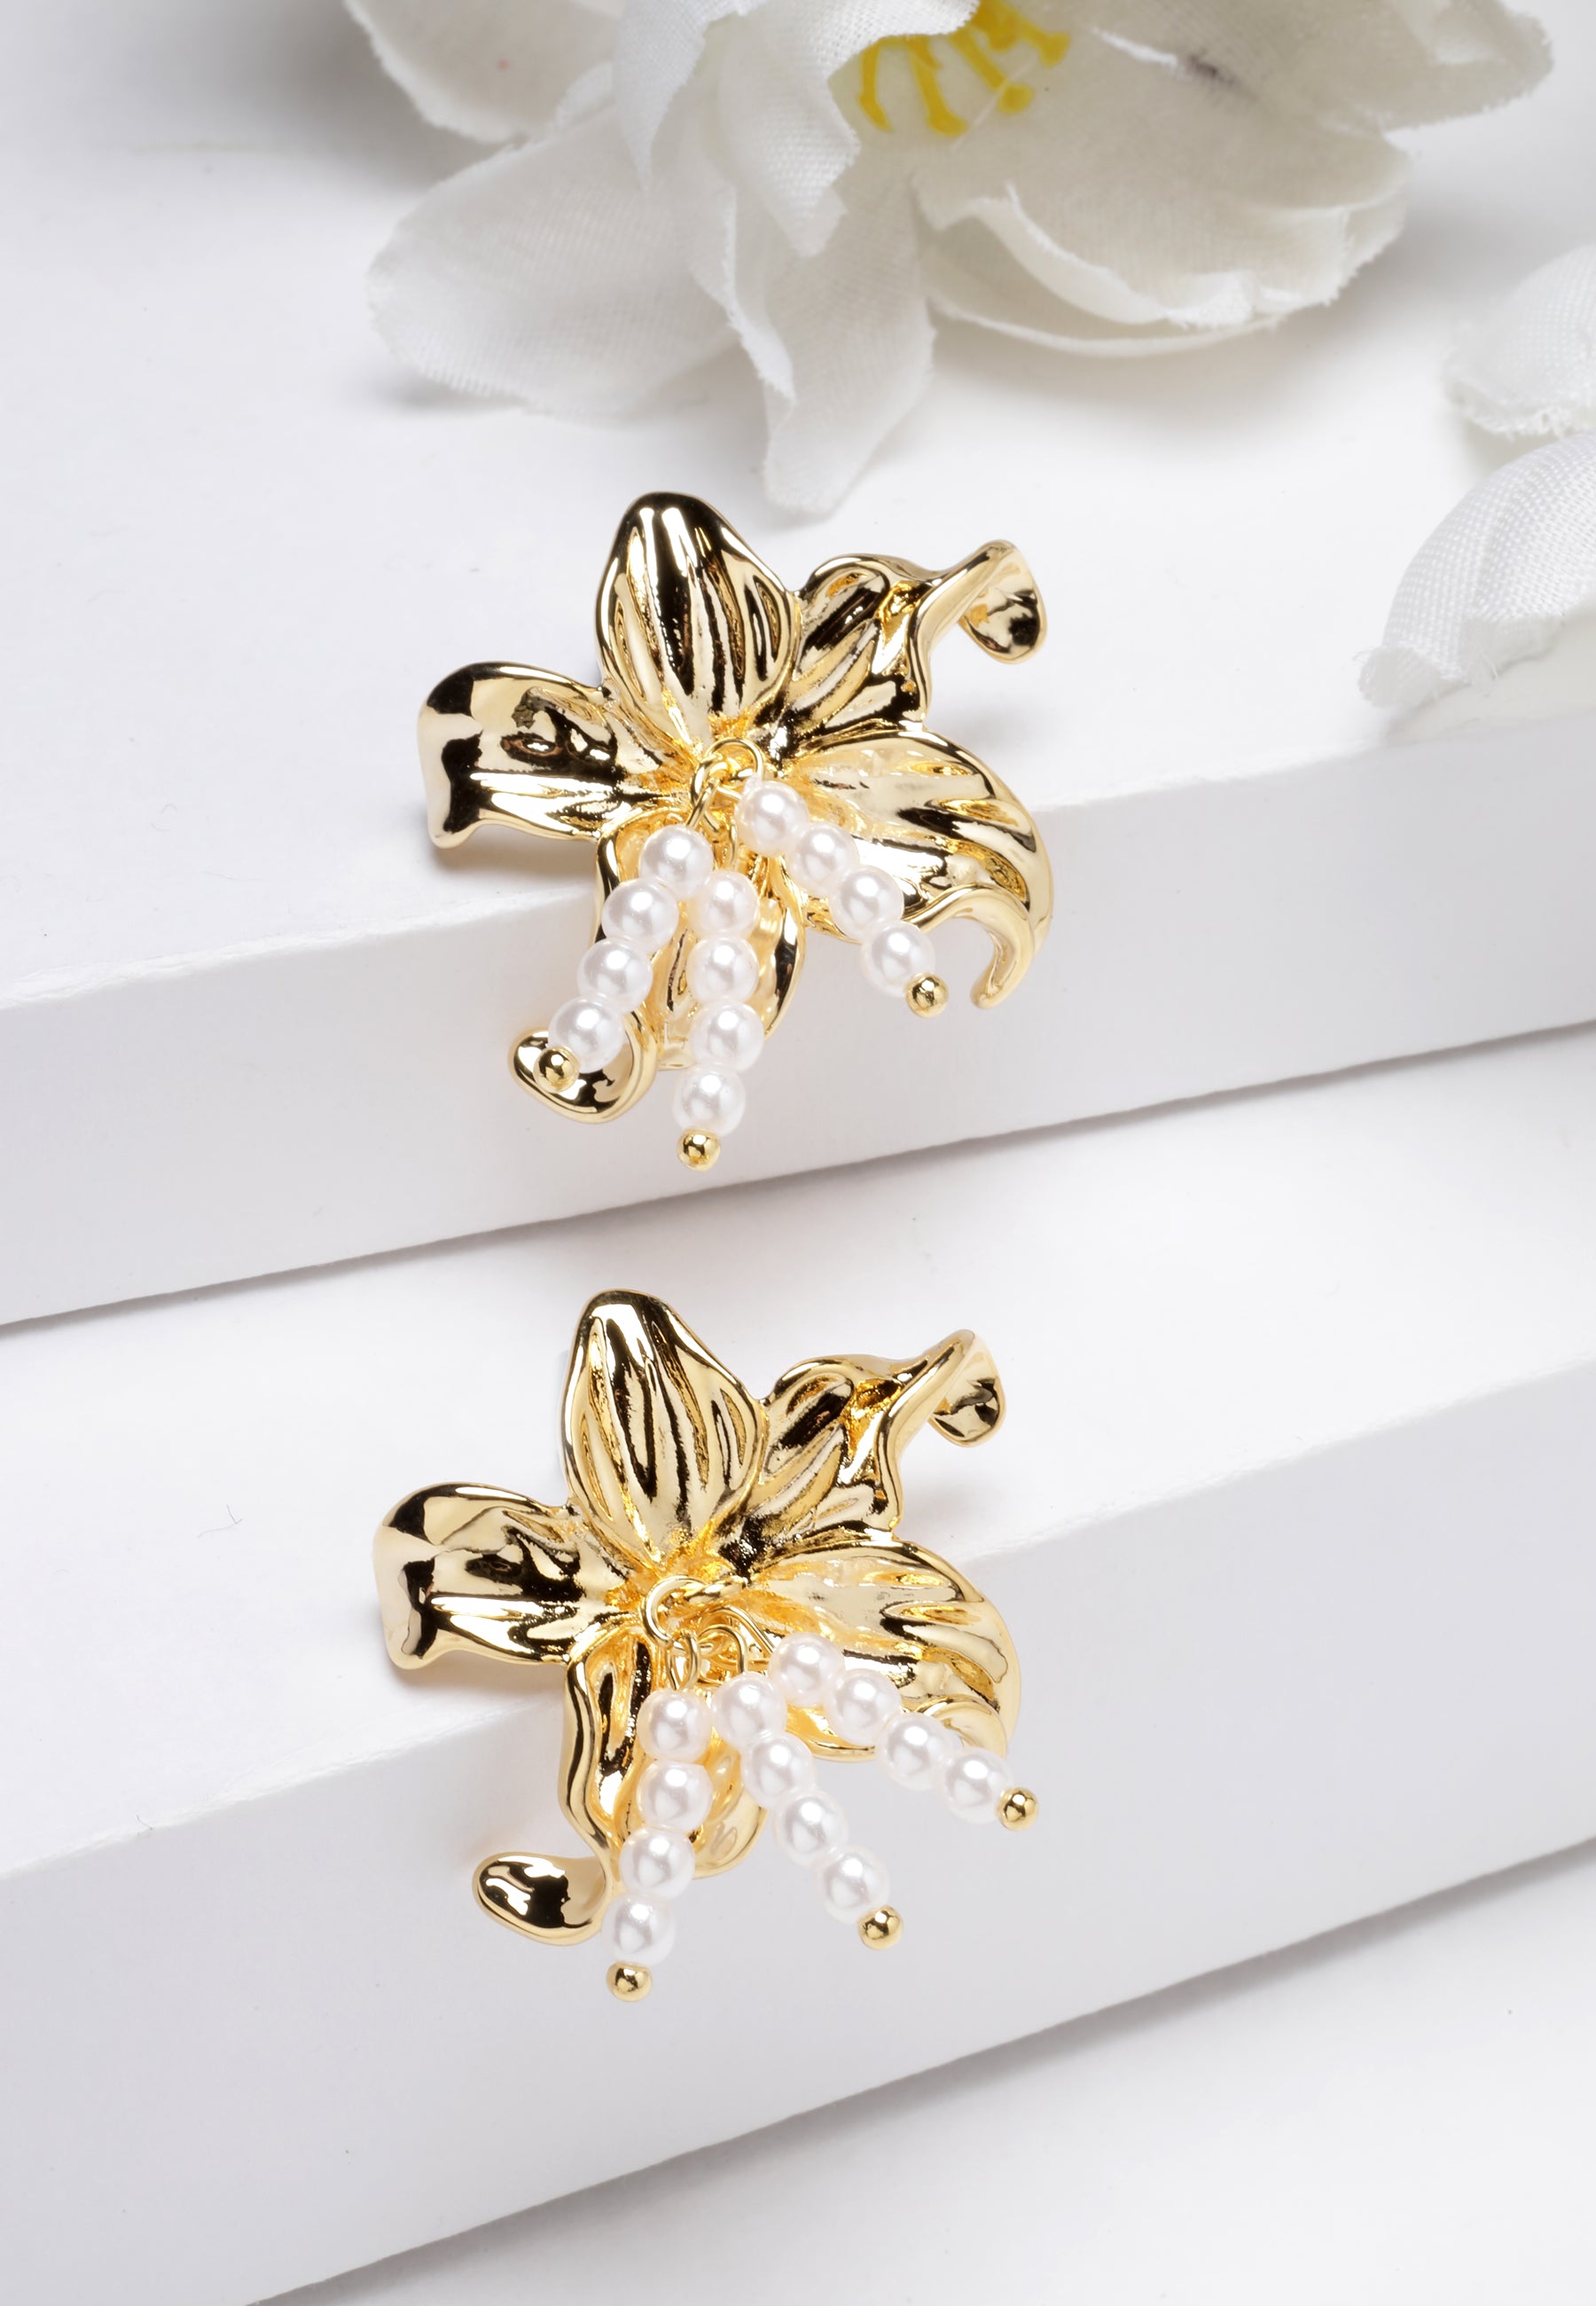 Avantgardistischer Pariser Perlen-Blumenohrring in Gold